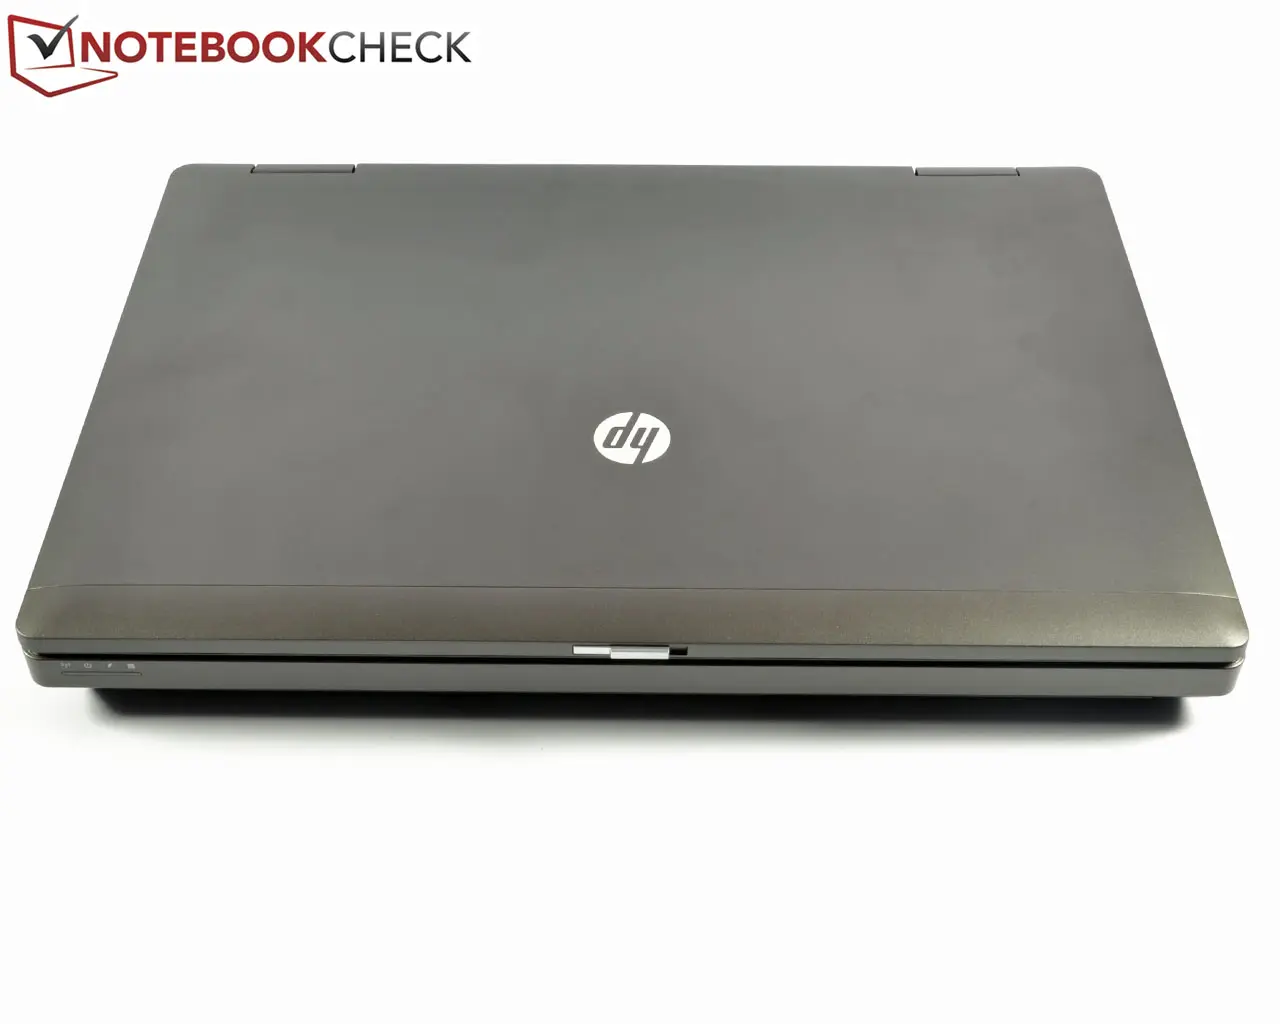 hewlett packard hp probook 6470b - Is HP ProBook 6470b upgradable